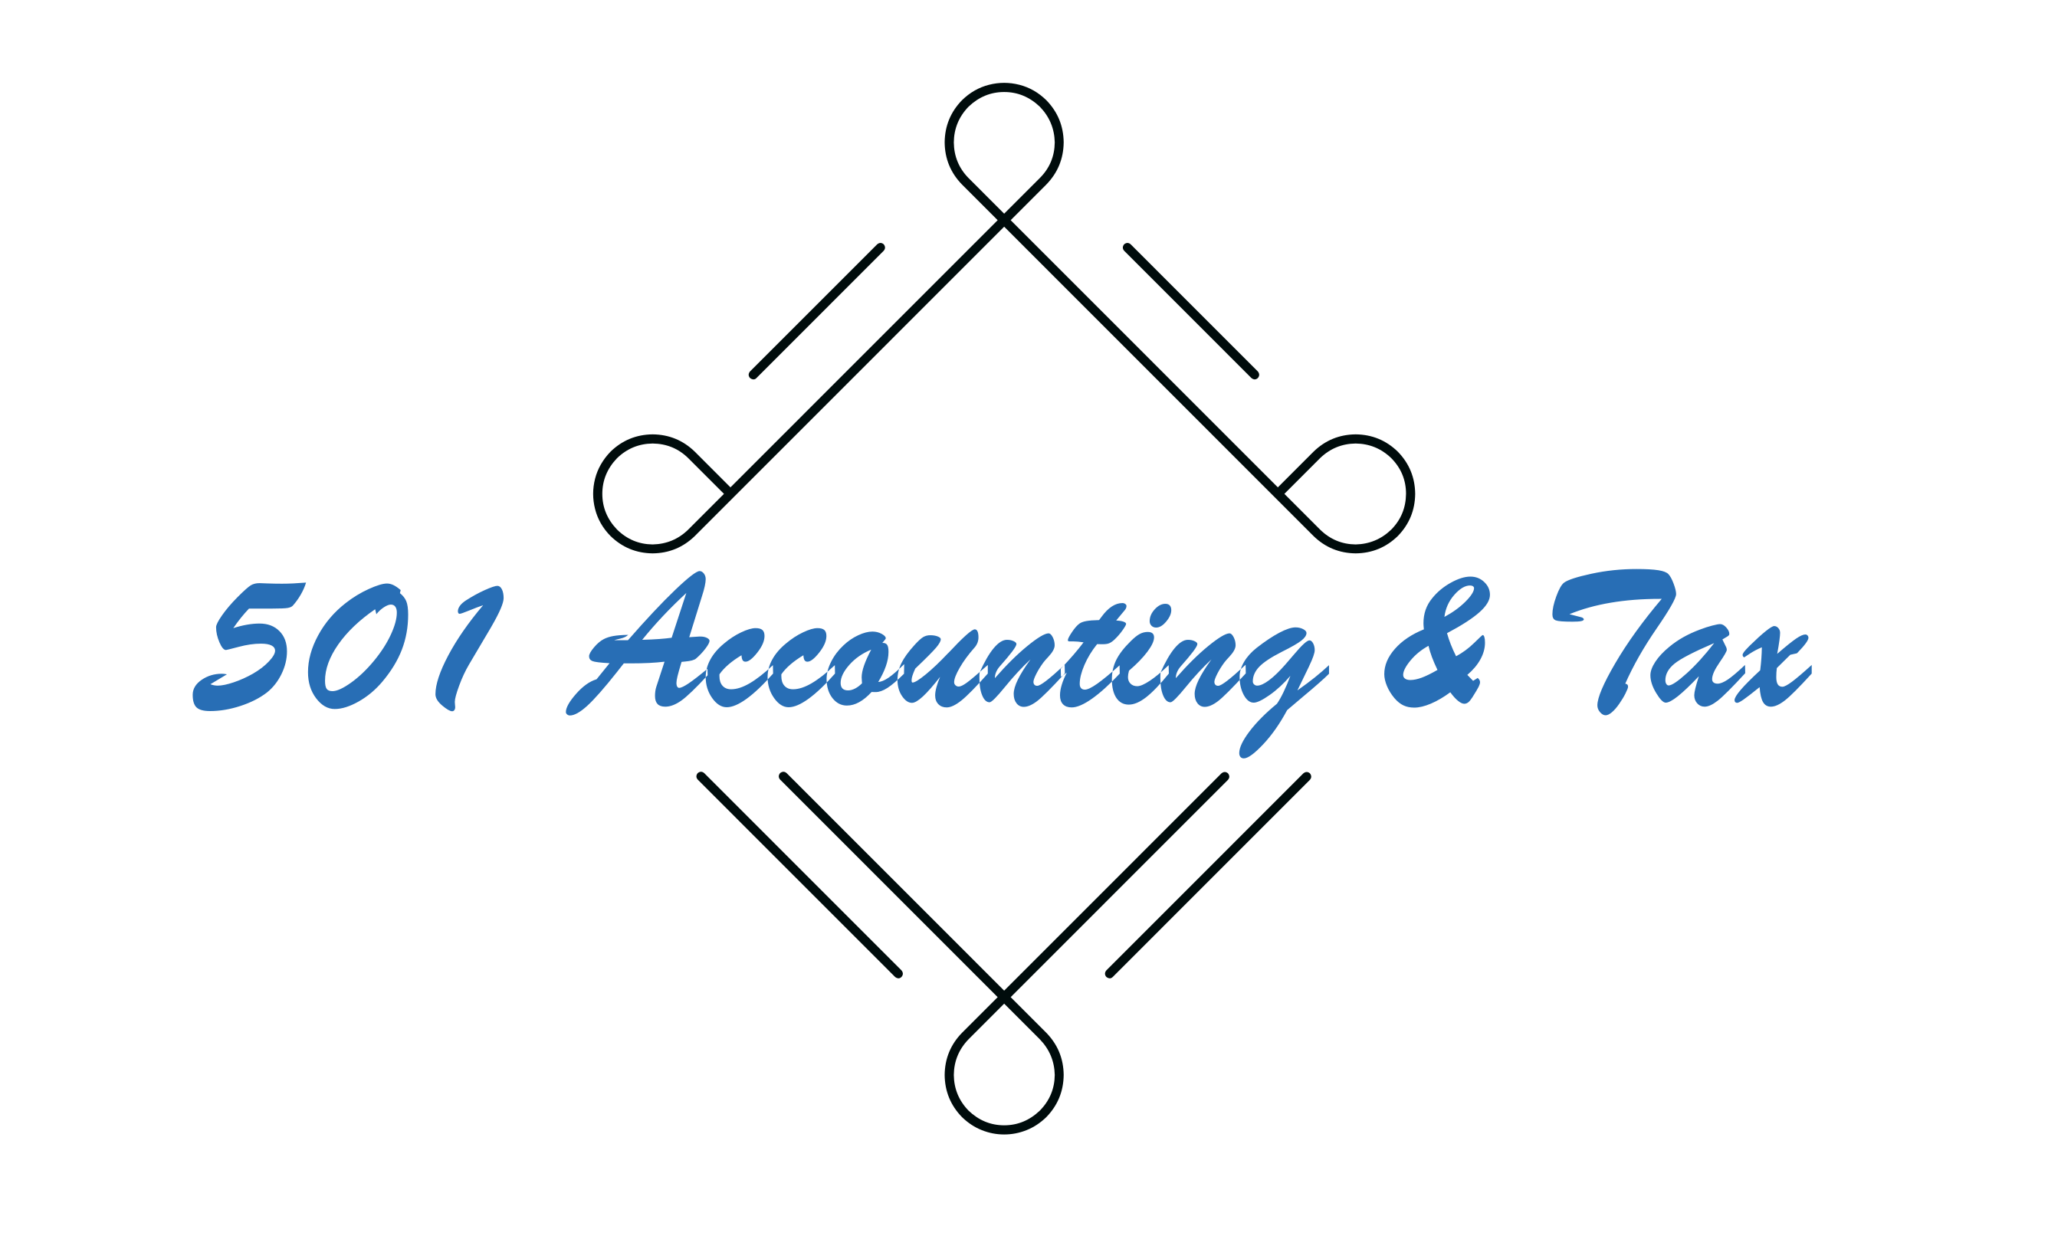 tax-tools-and-calculators-501-accounting-tax-inc